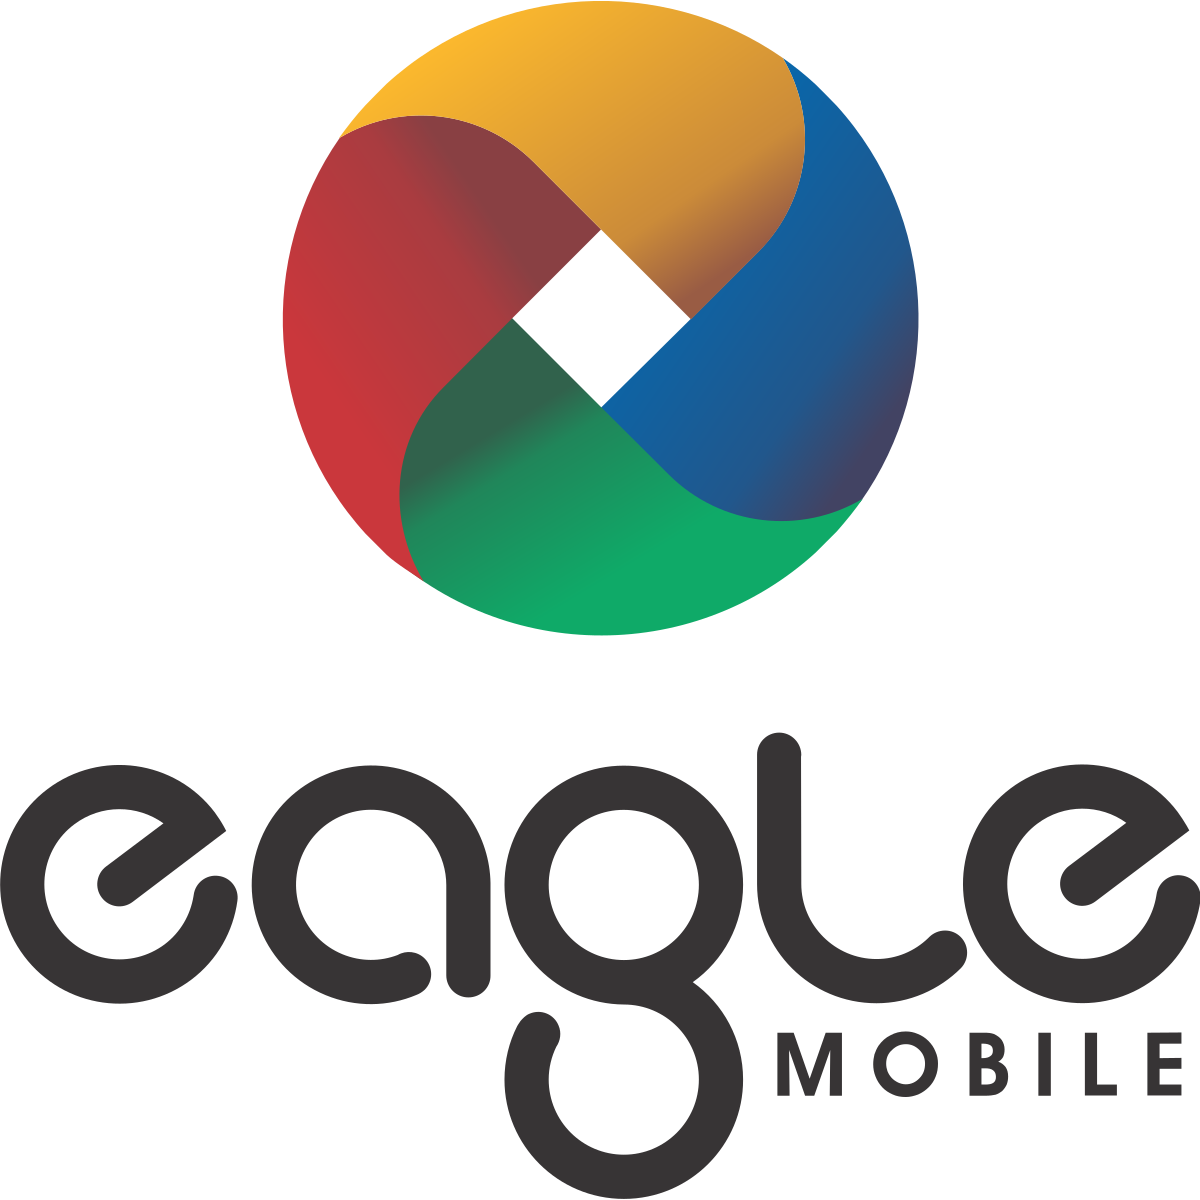 eagle mobile Logo photo - 1